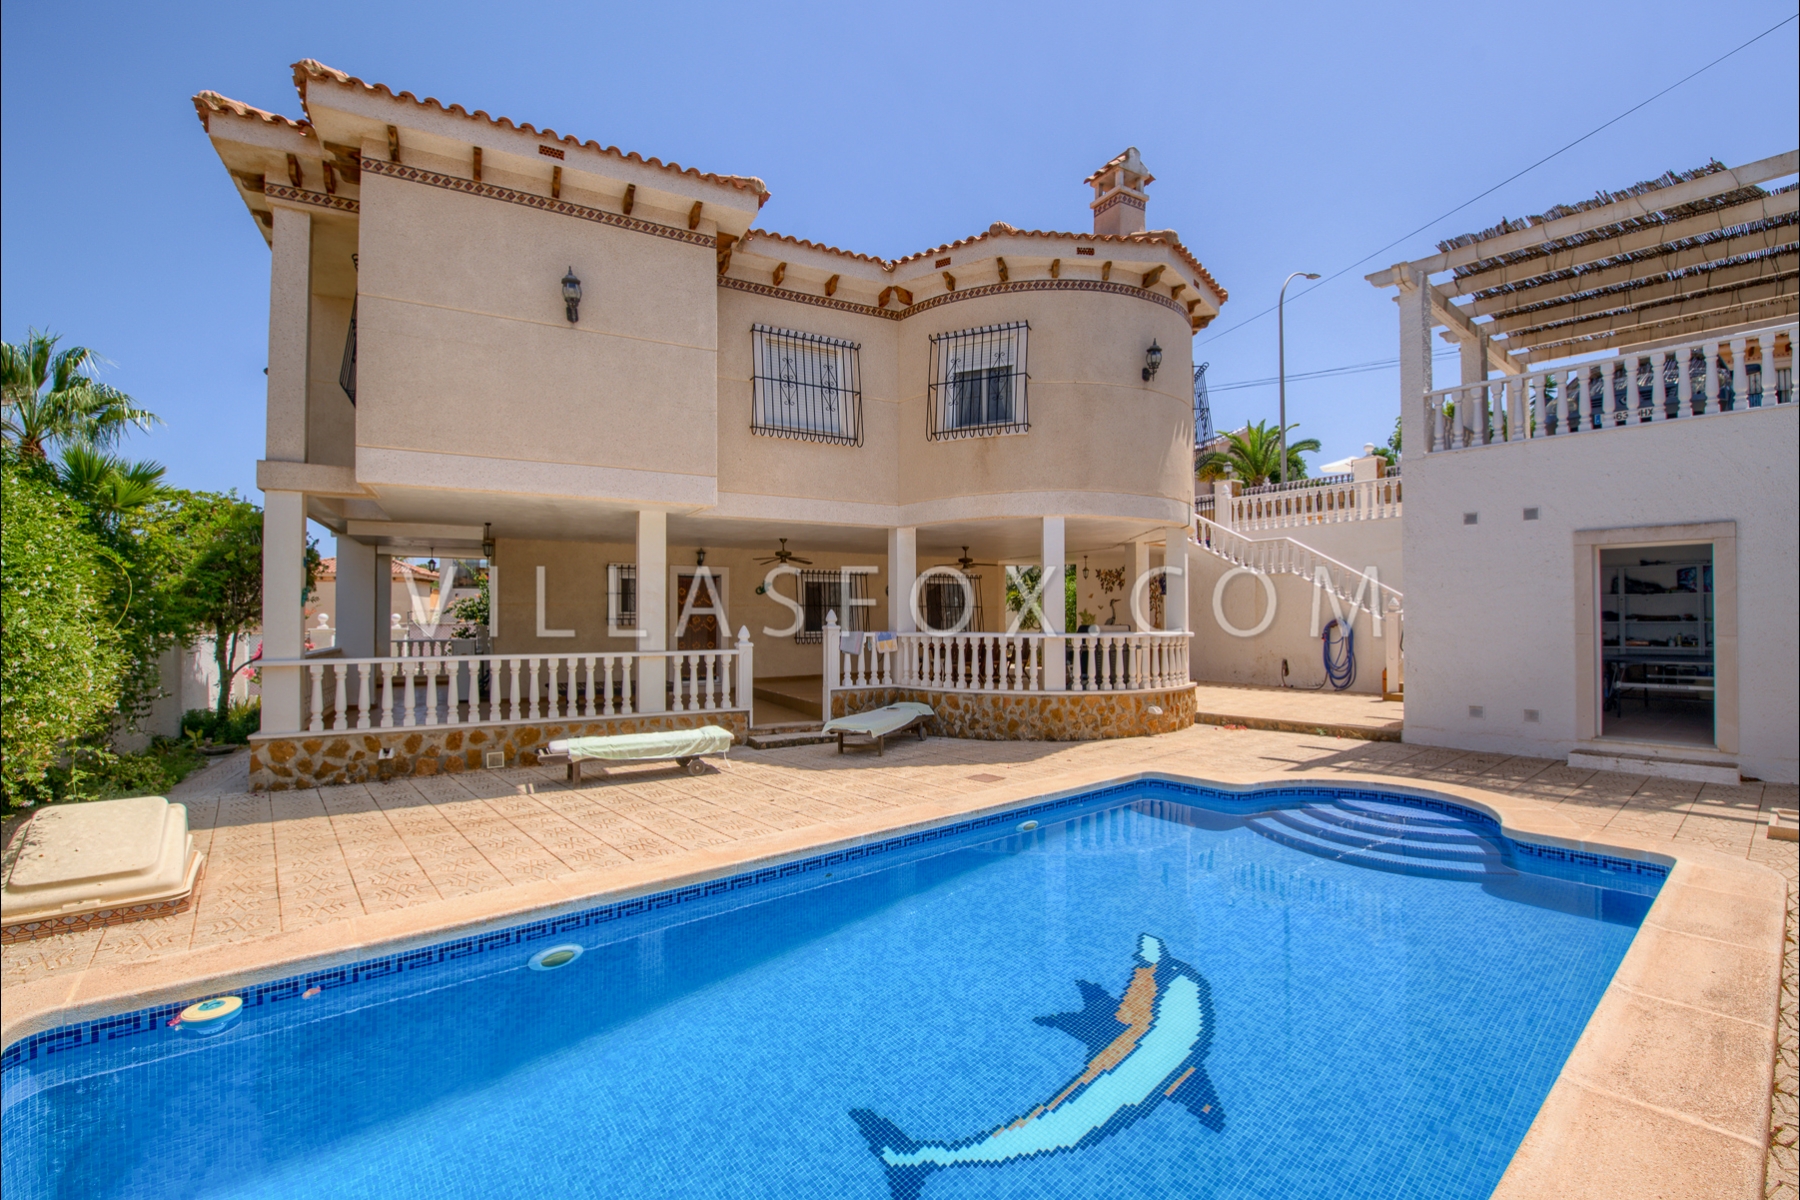 Villasmaría luksushuvila, jossa vierashuoneisto, pelihuone ja oma uima-allas!